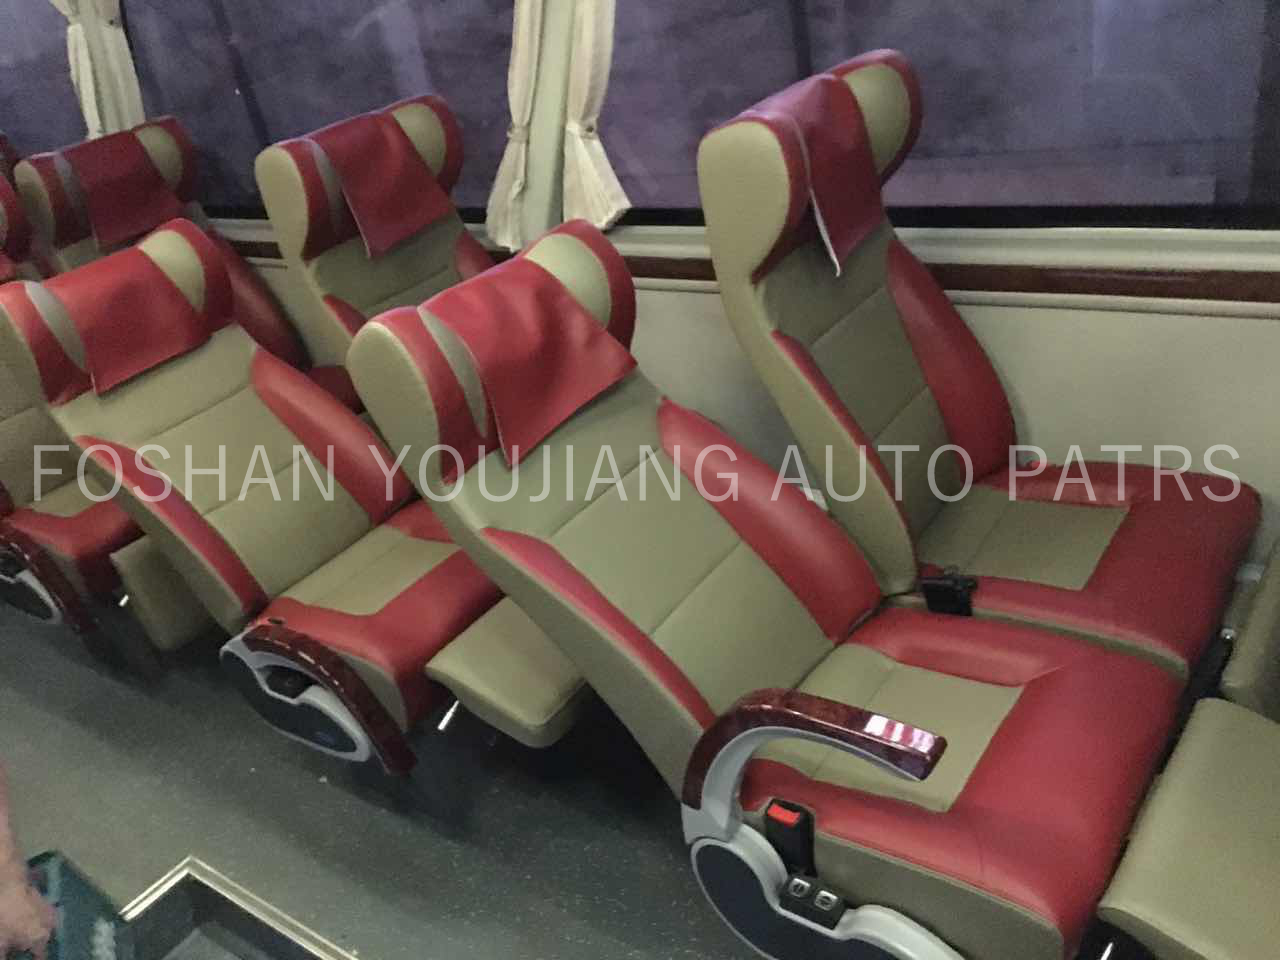 leather custom bus seat,new luxury bus seat,comfortable vip bus seat